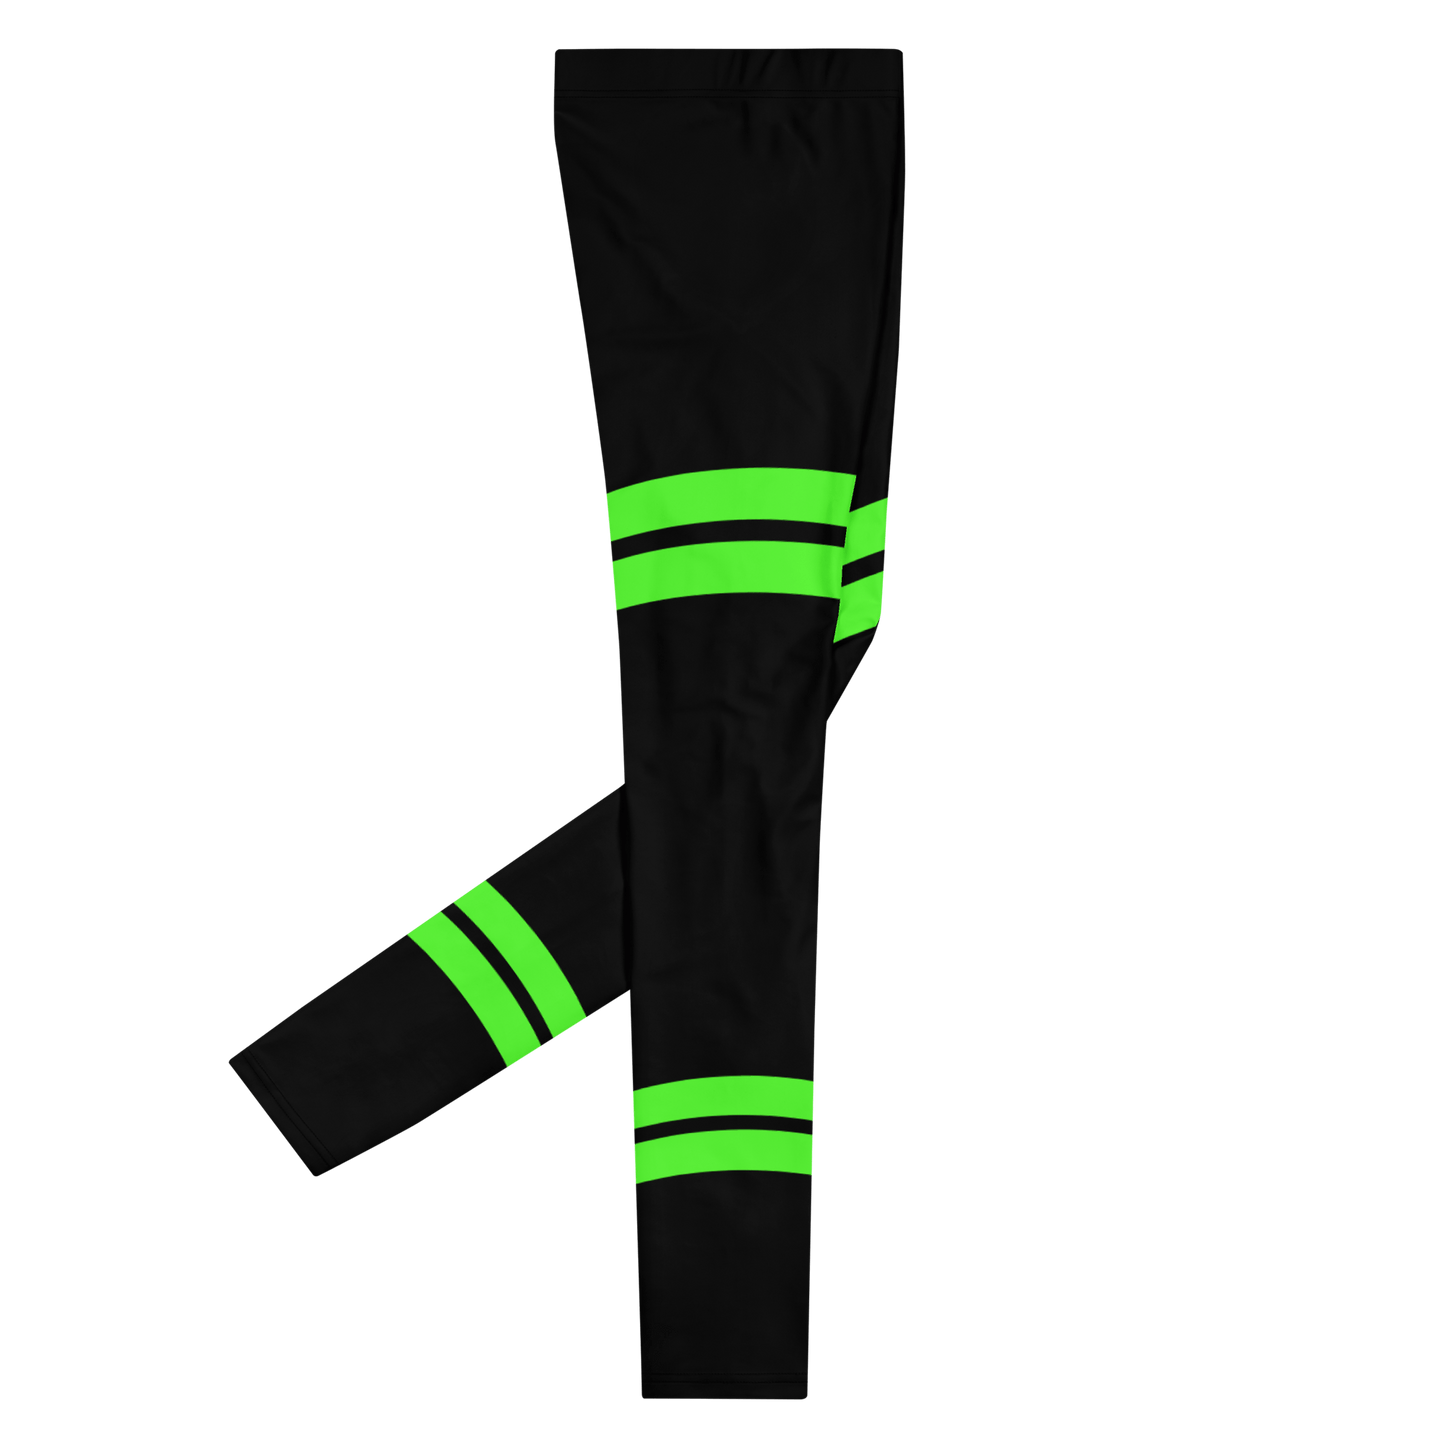 Xtreme Green Men's Leggings - Gifternaut